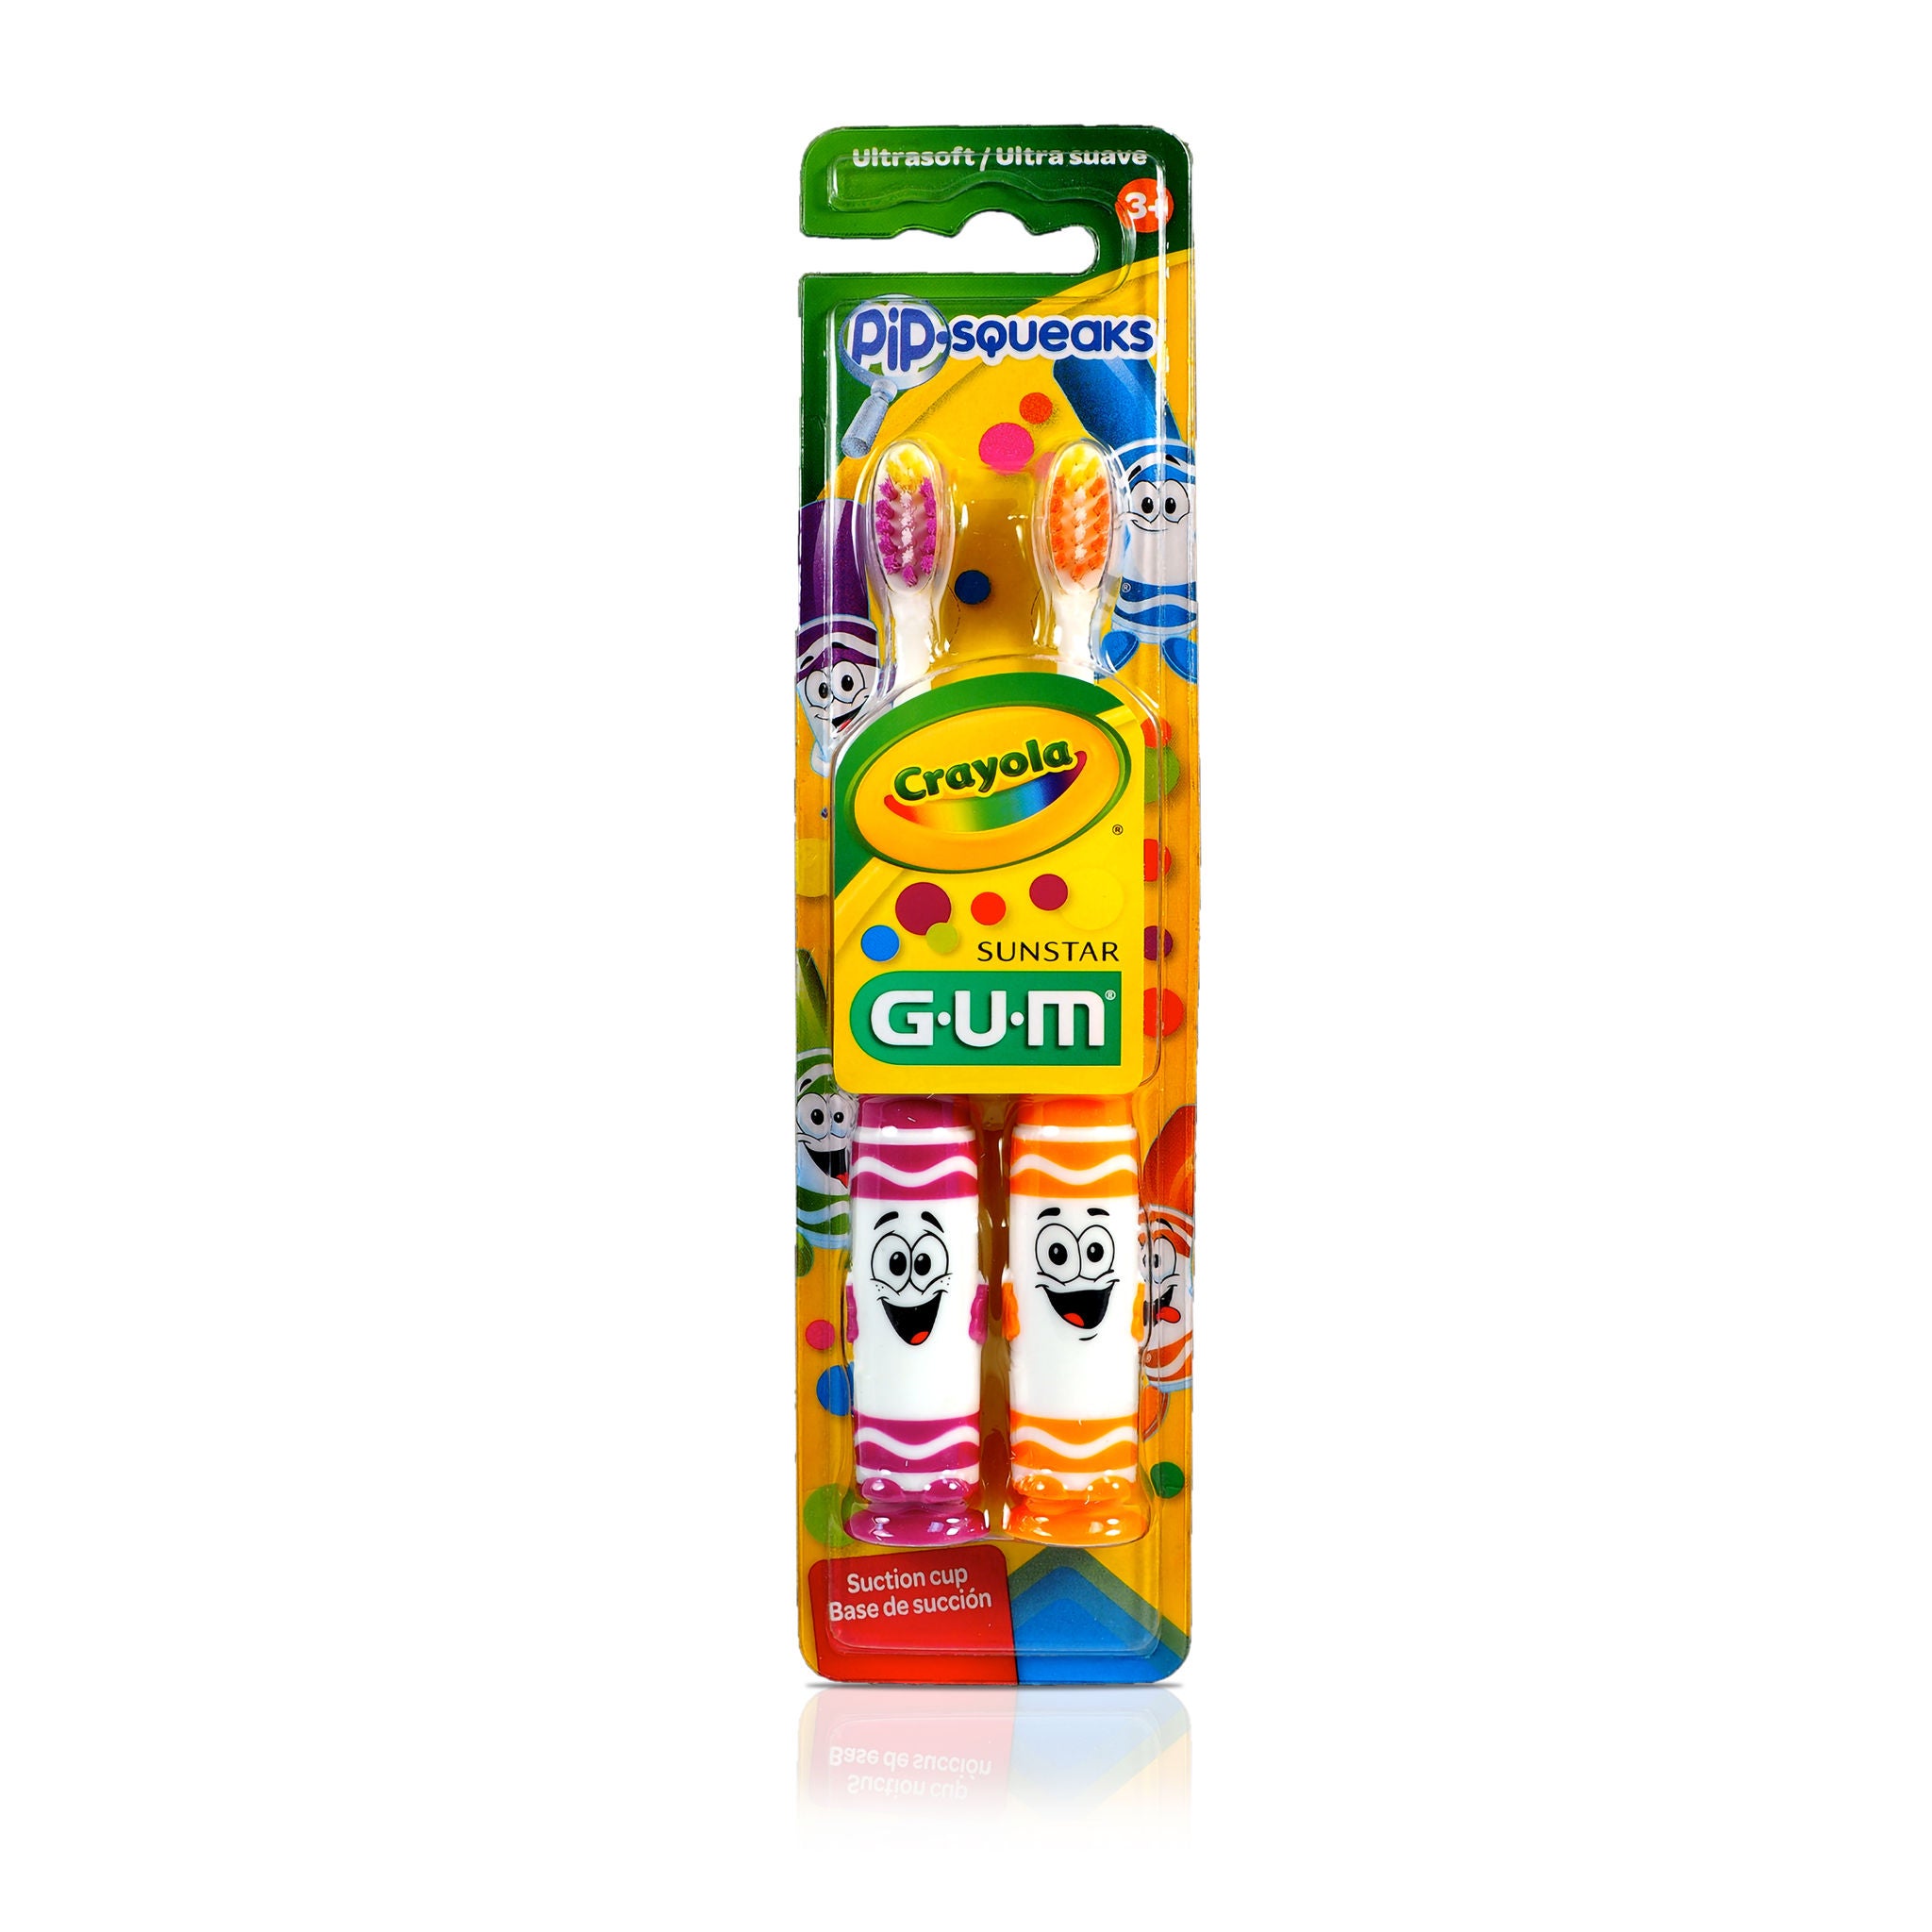 232KKA-Product-Packaging-Toothbrush-Crayola-PipSqueaks-front-2ct.jpg